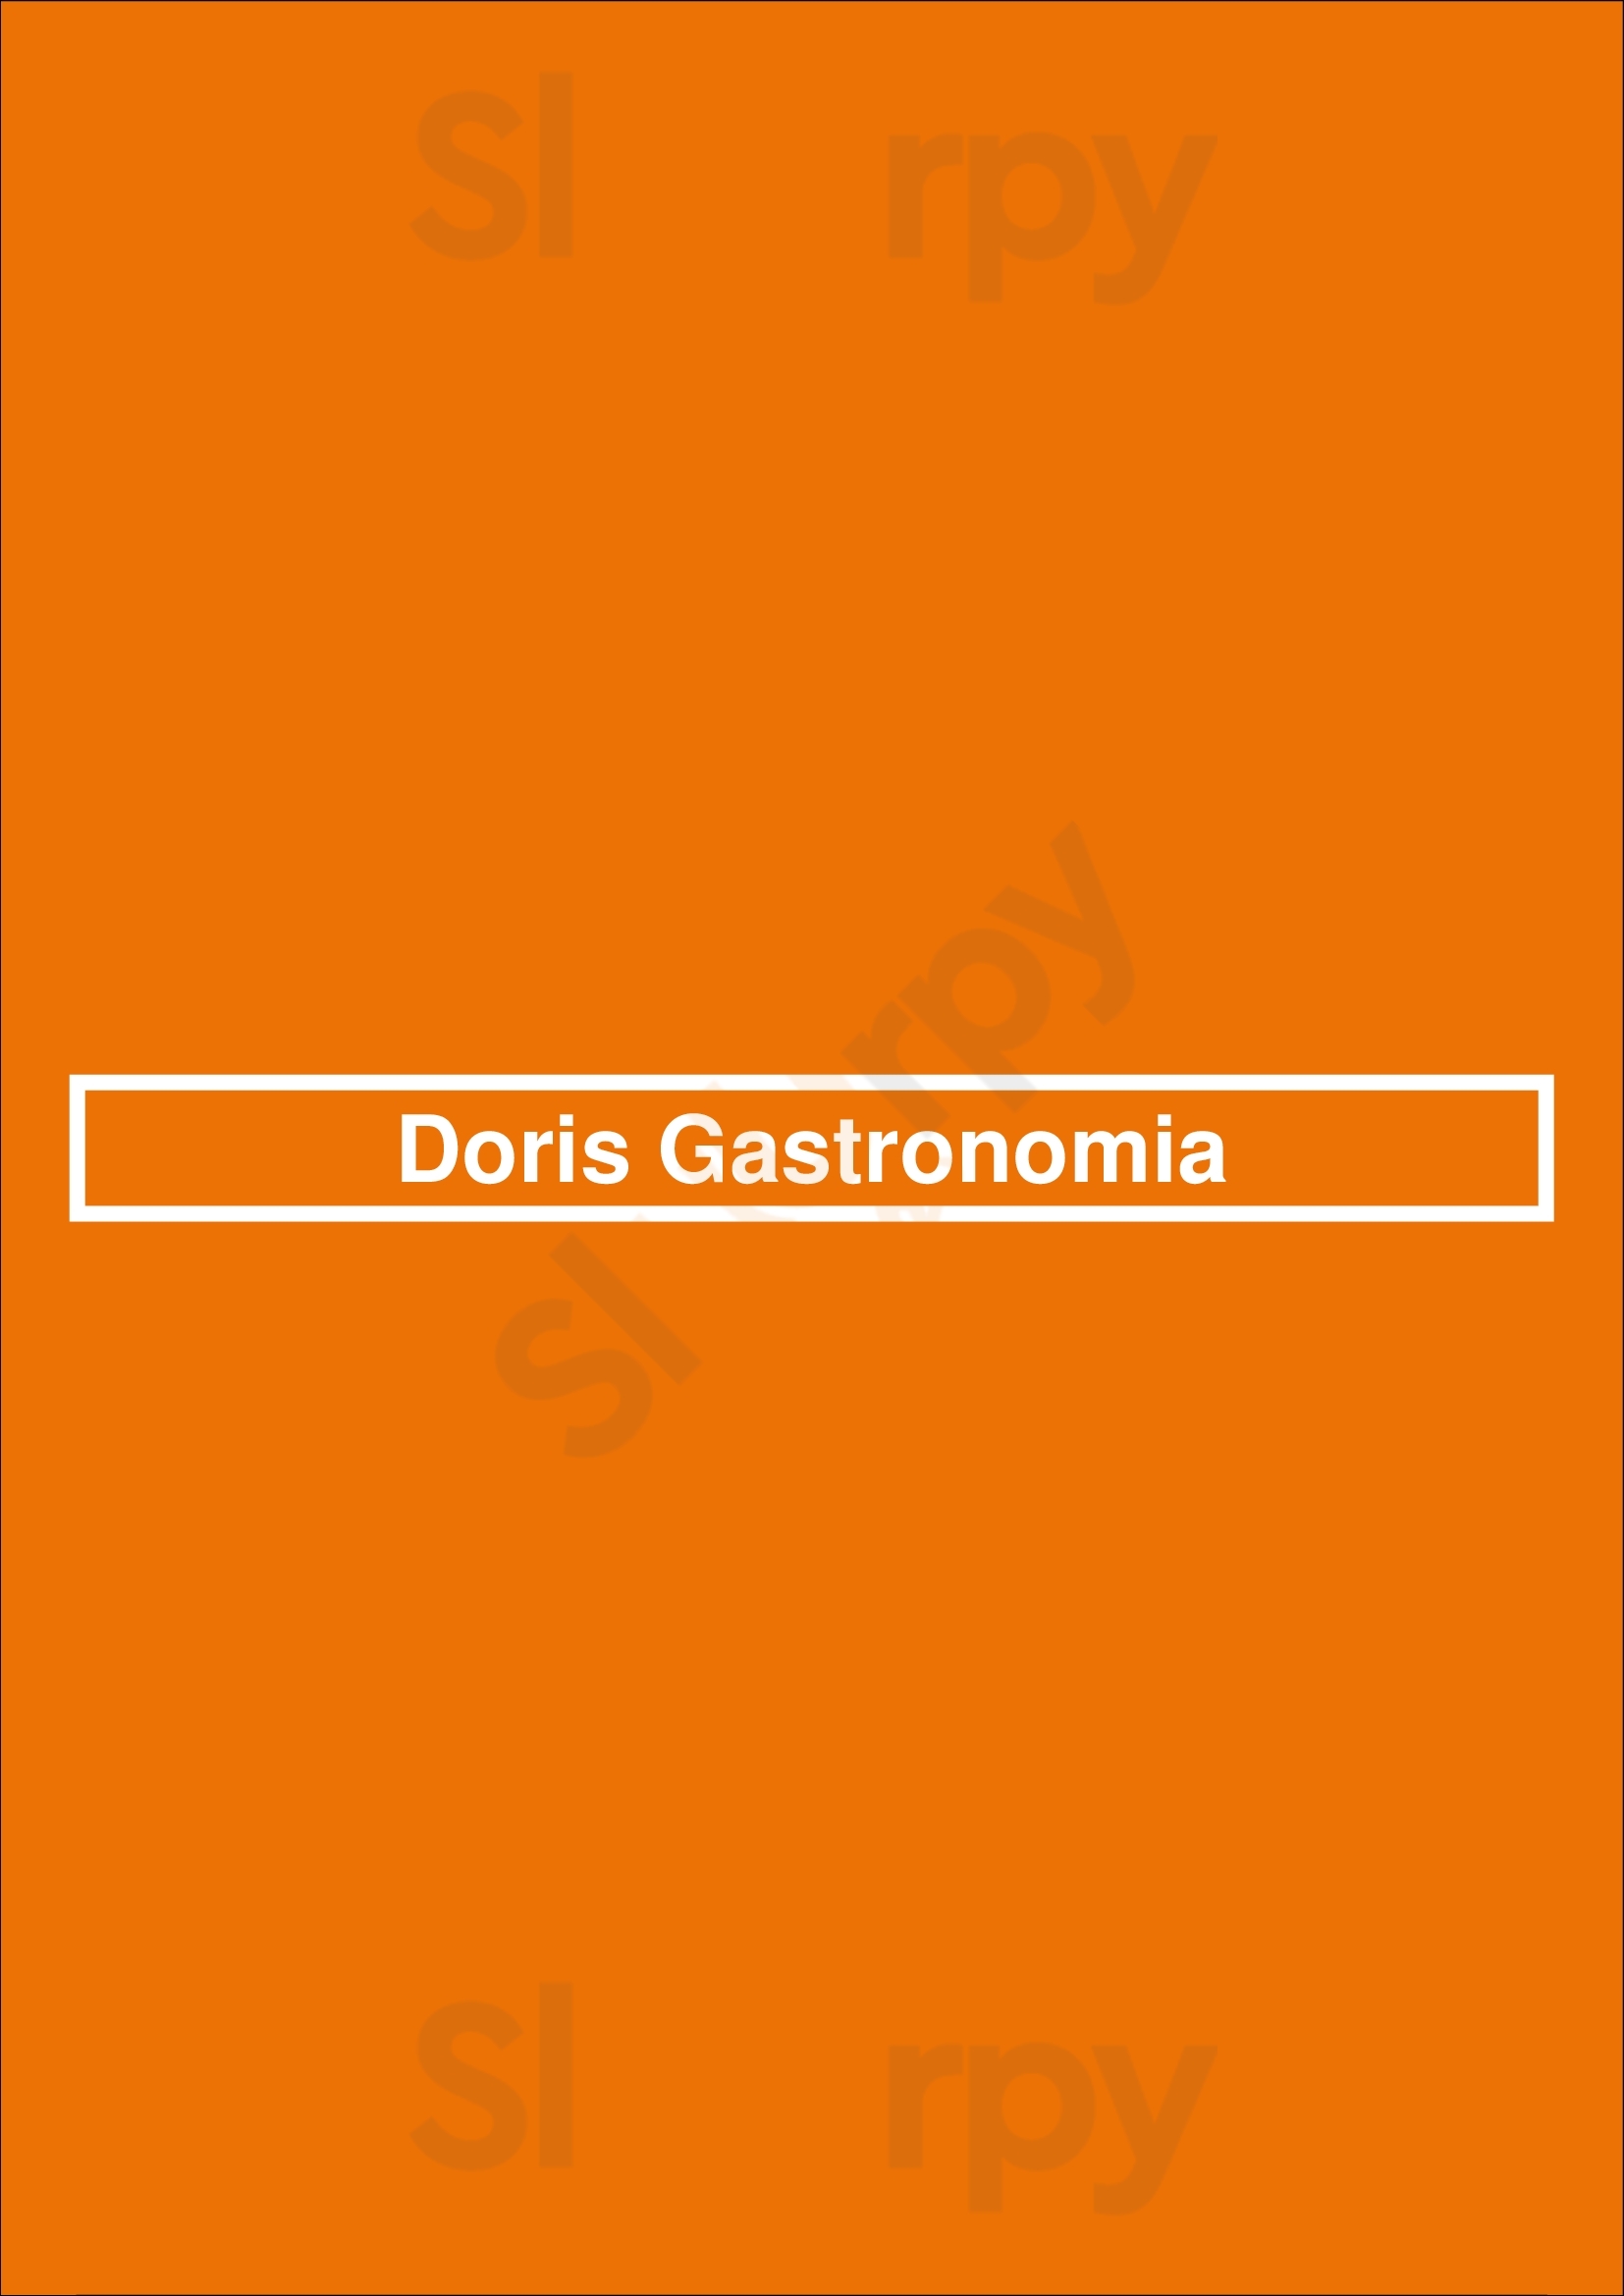 Doris Gastronomia São Paulo Menu - 1